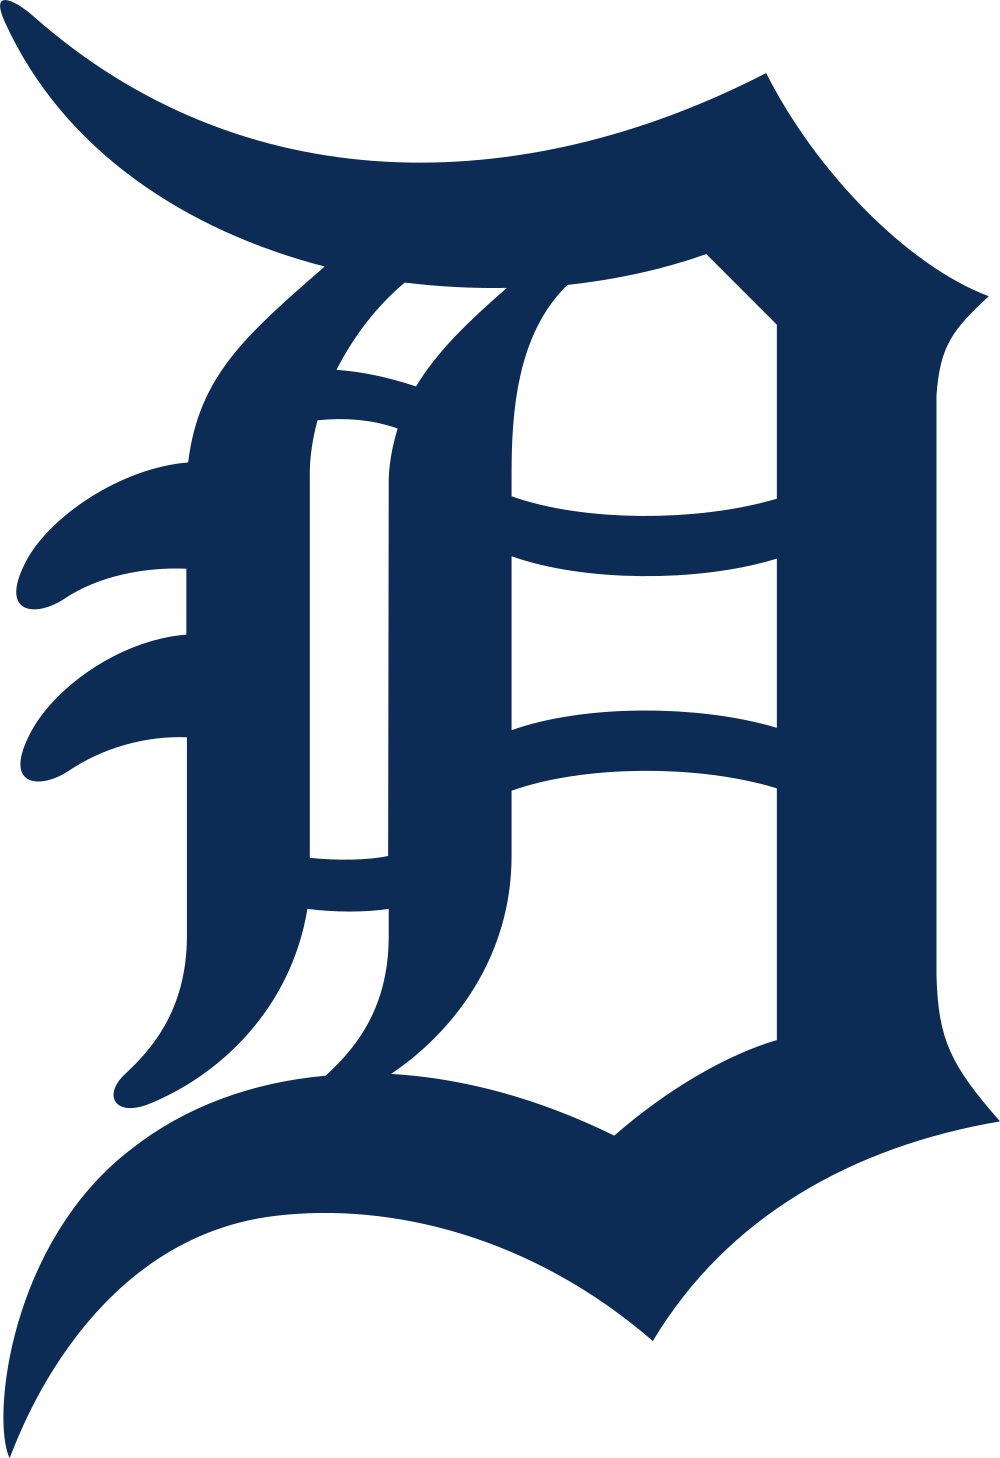 Detroit Tigers logo png transparent